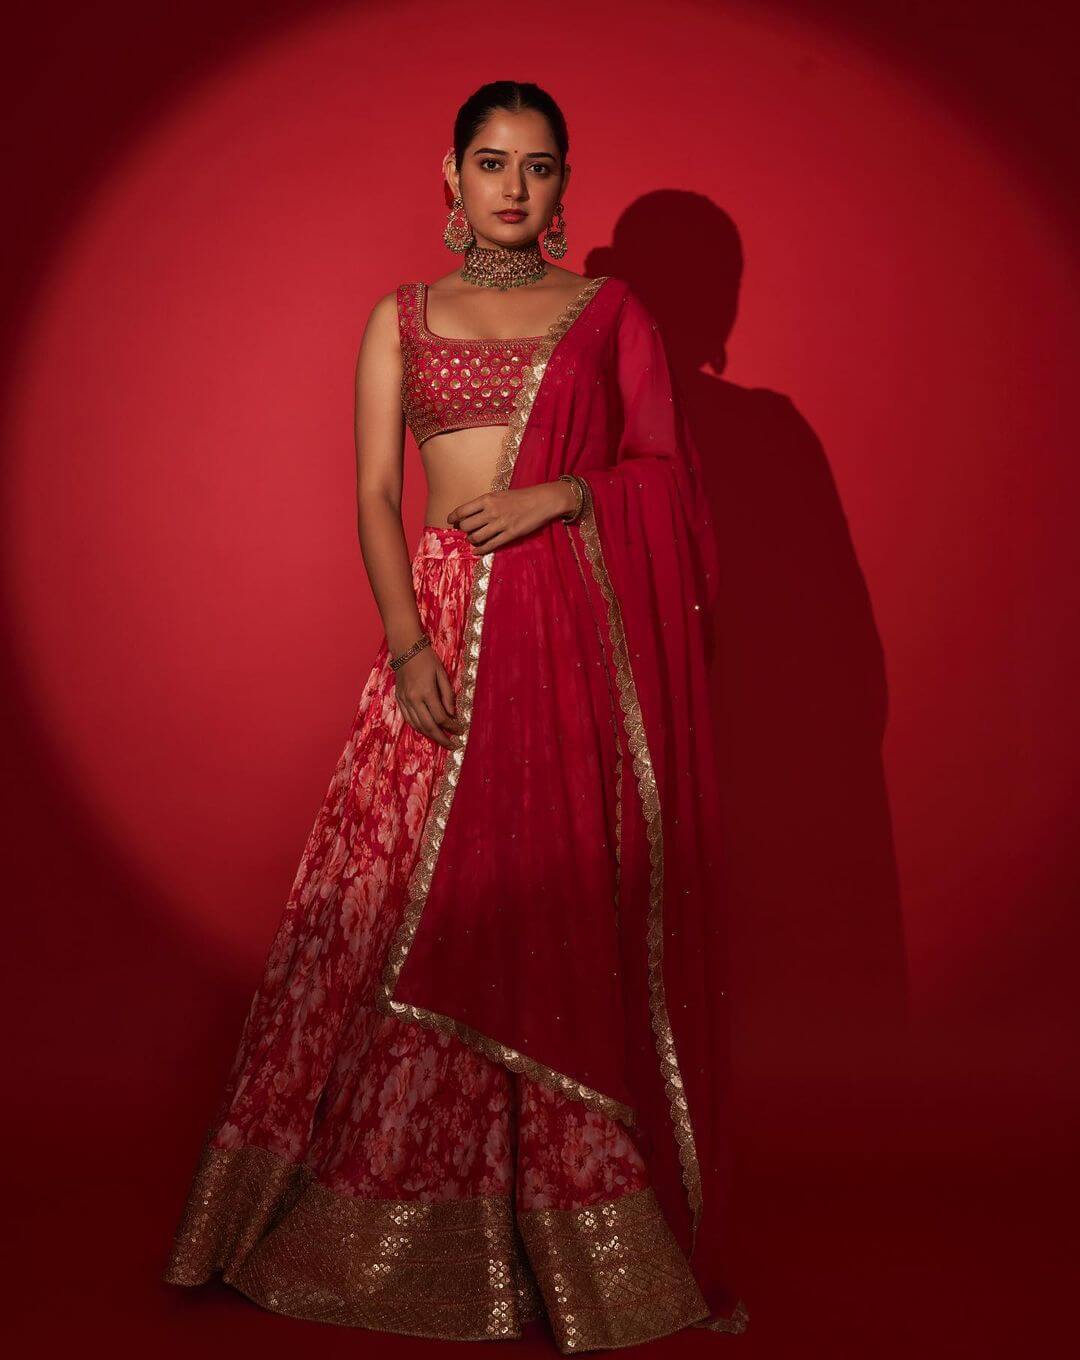 Ashika Ranganath Look Stunning in Red Lehenga Outfit